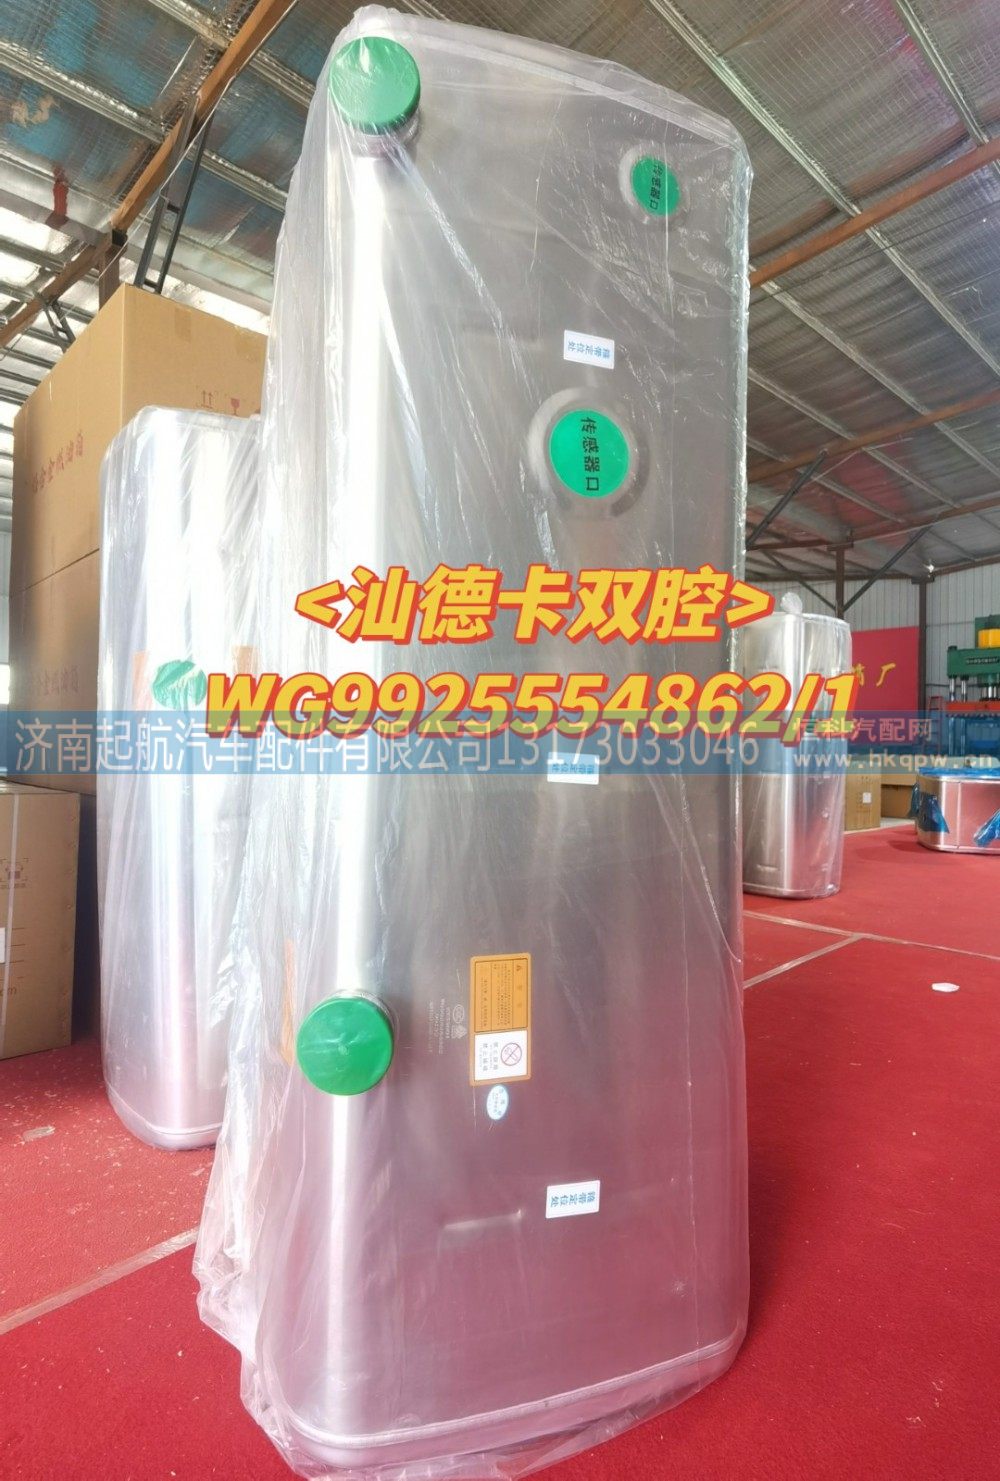 WG9925554862/1,,济南起航油箱厂